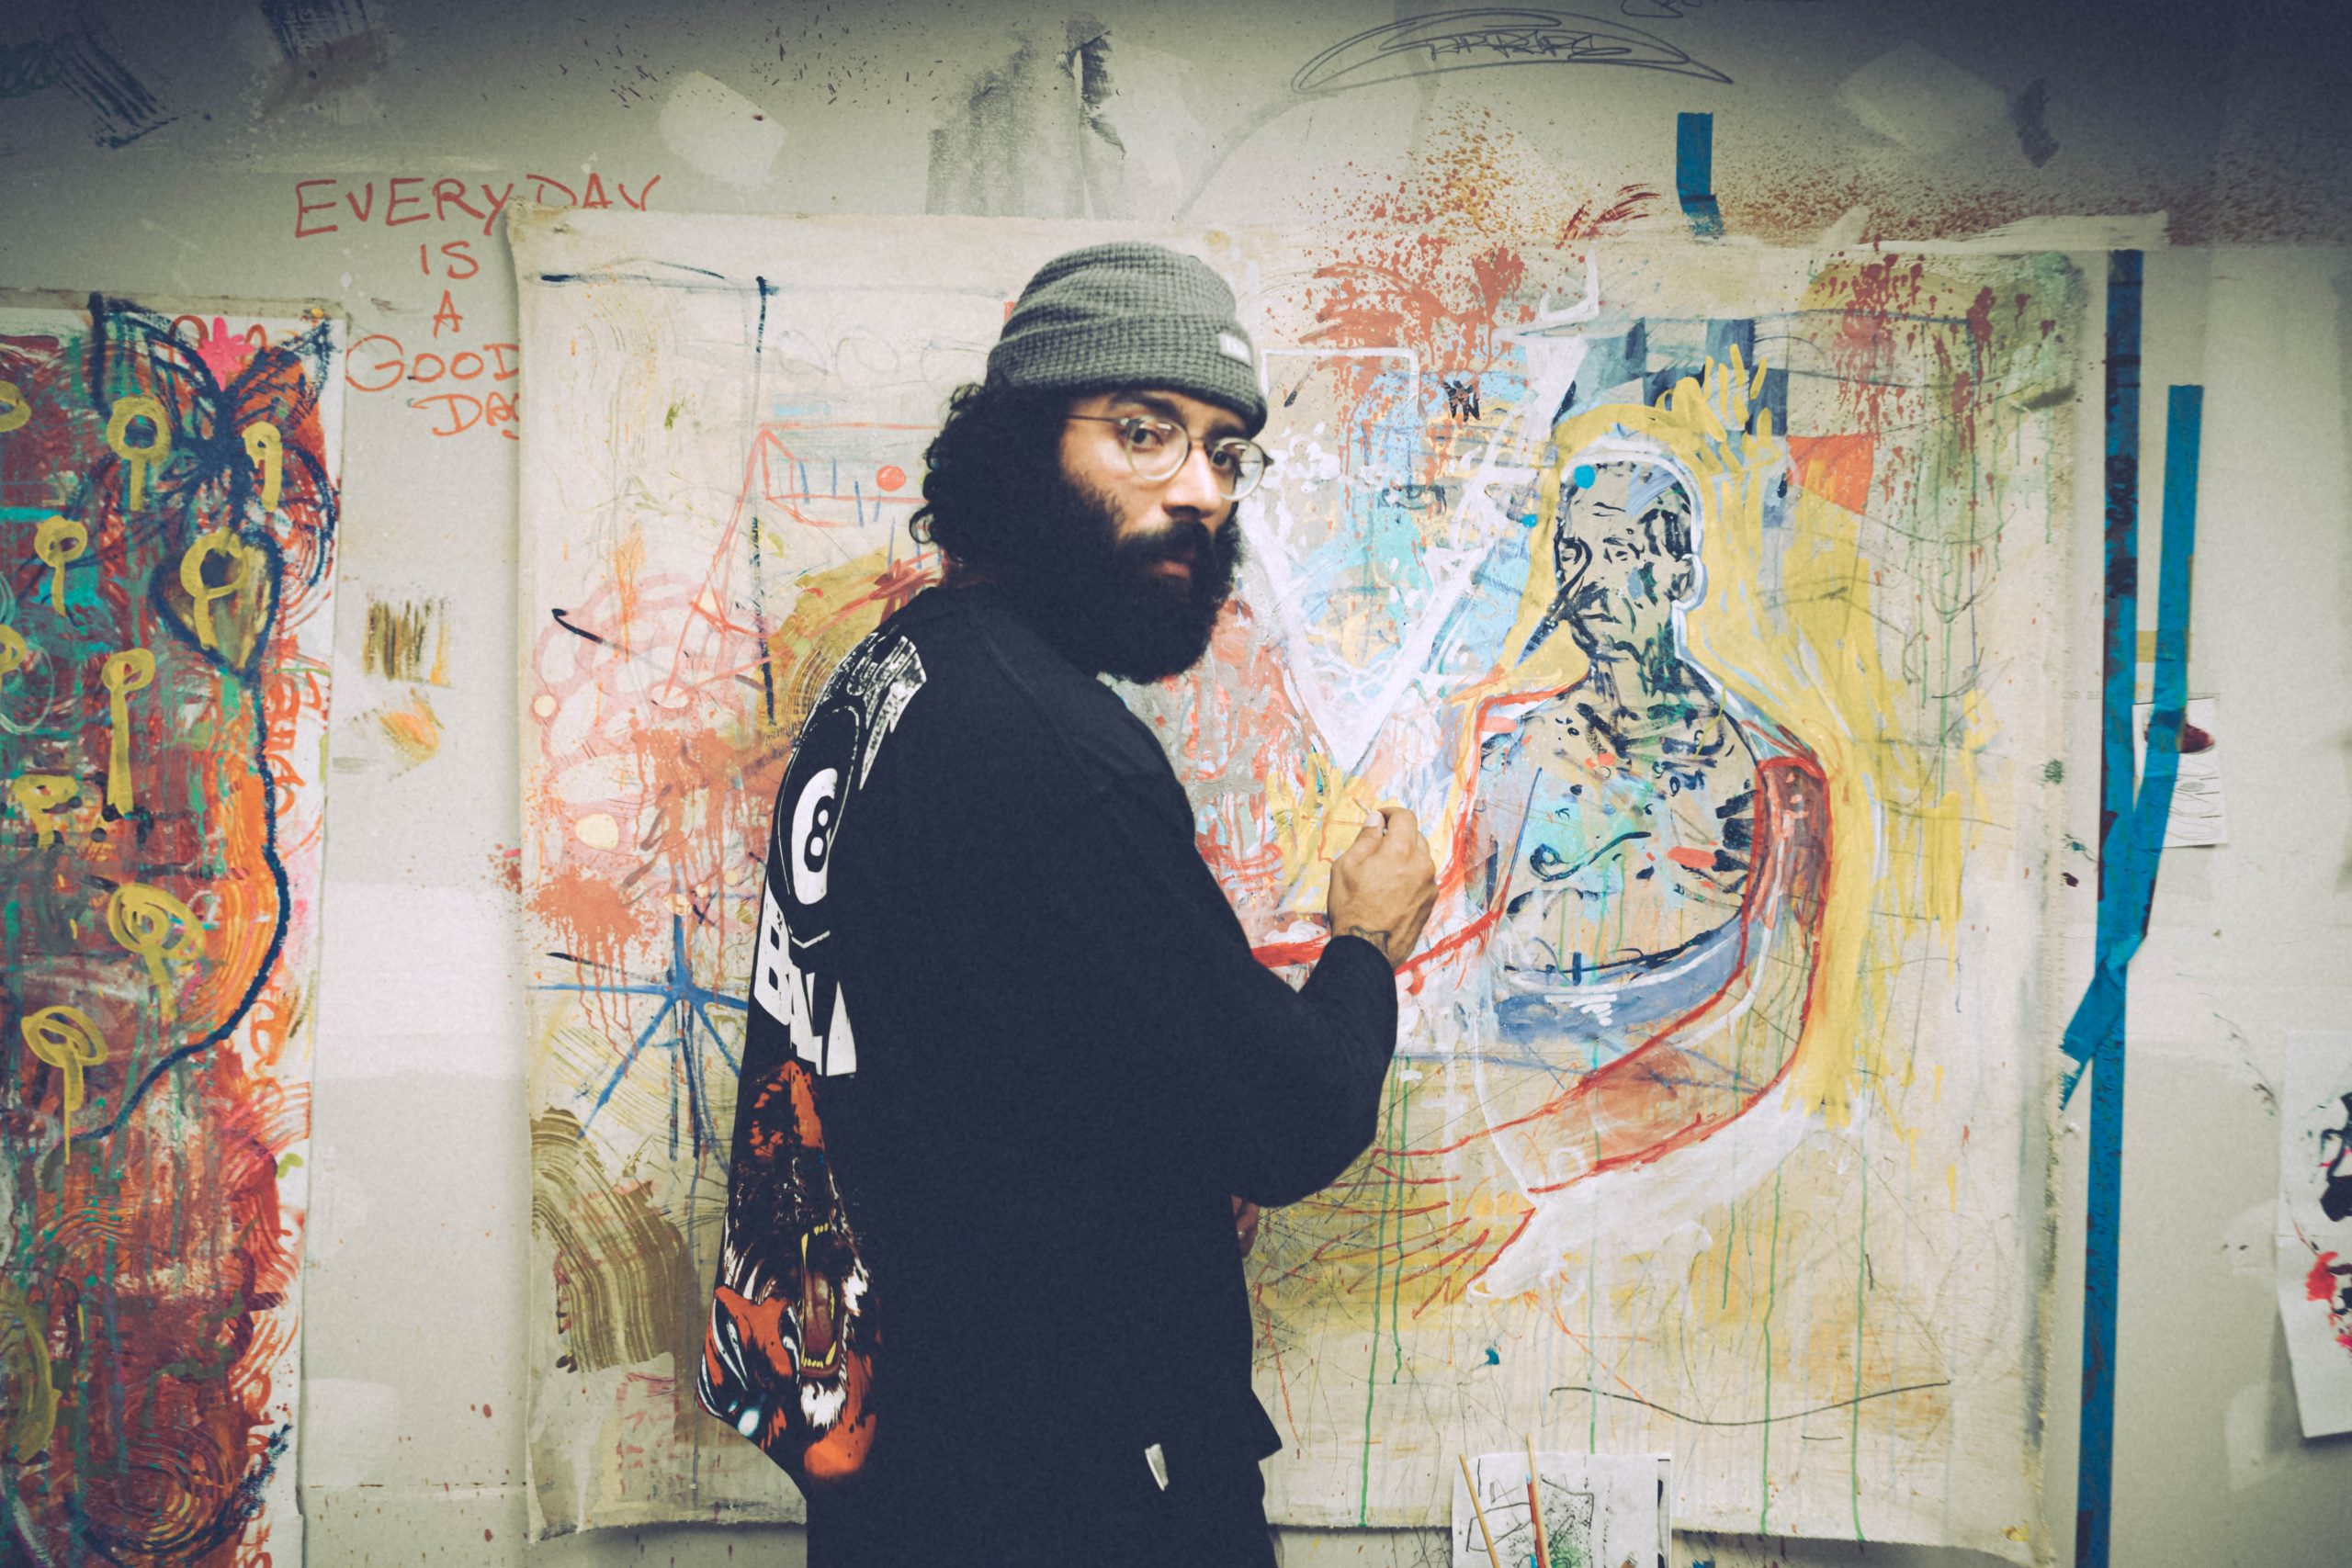 man with beard painting